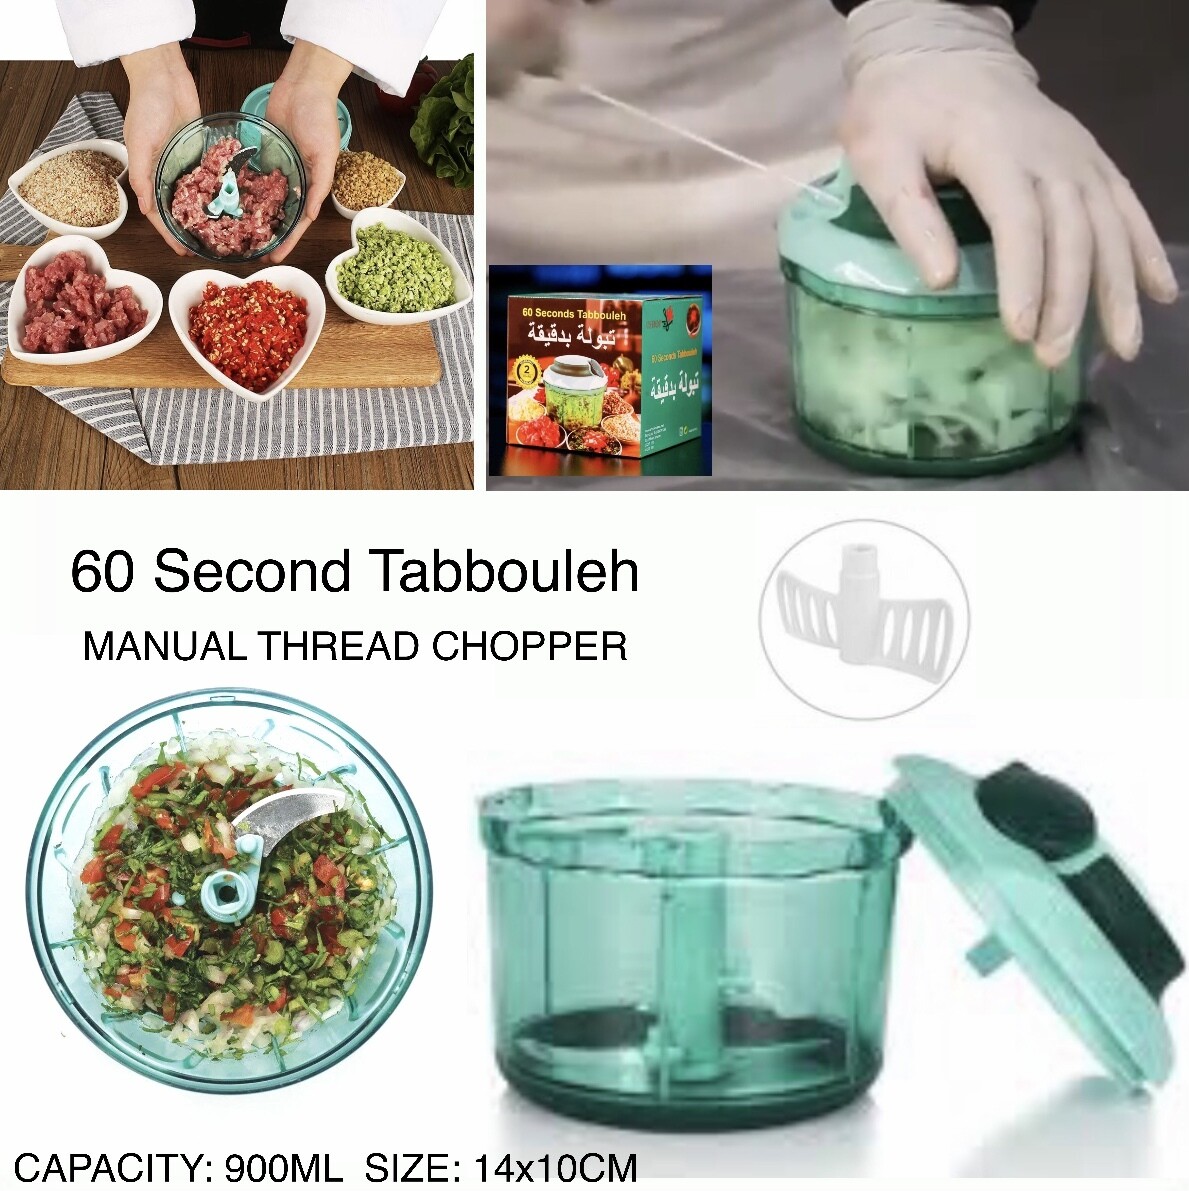 60 Second Tabbouleh